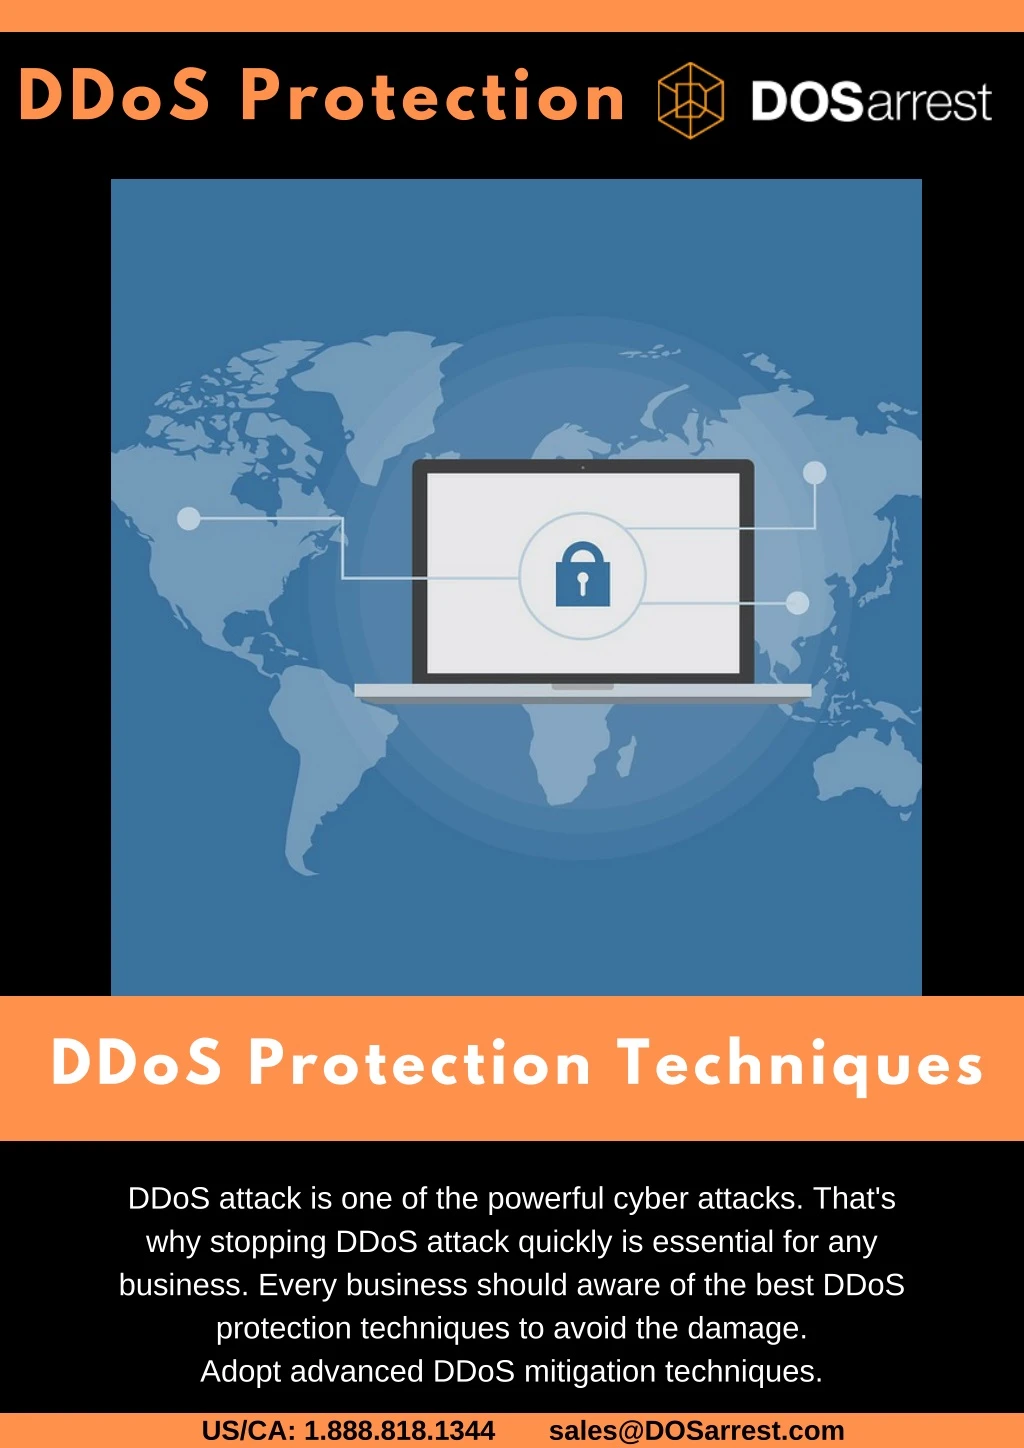 ddos protection